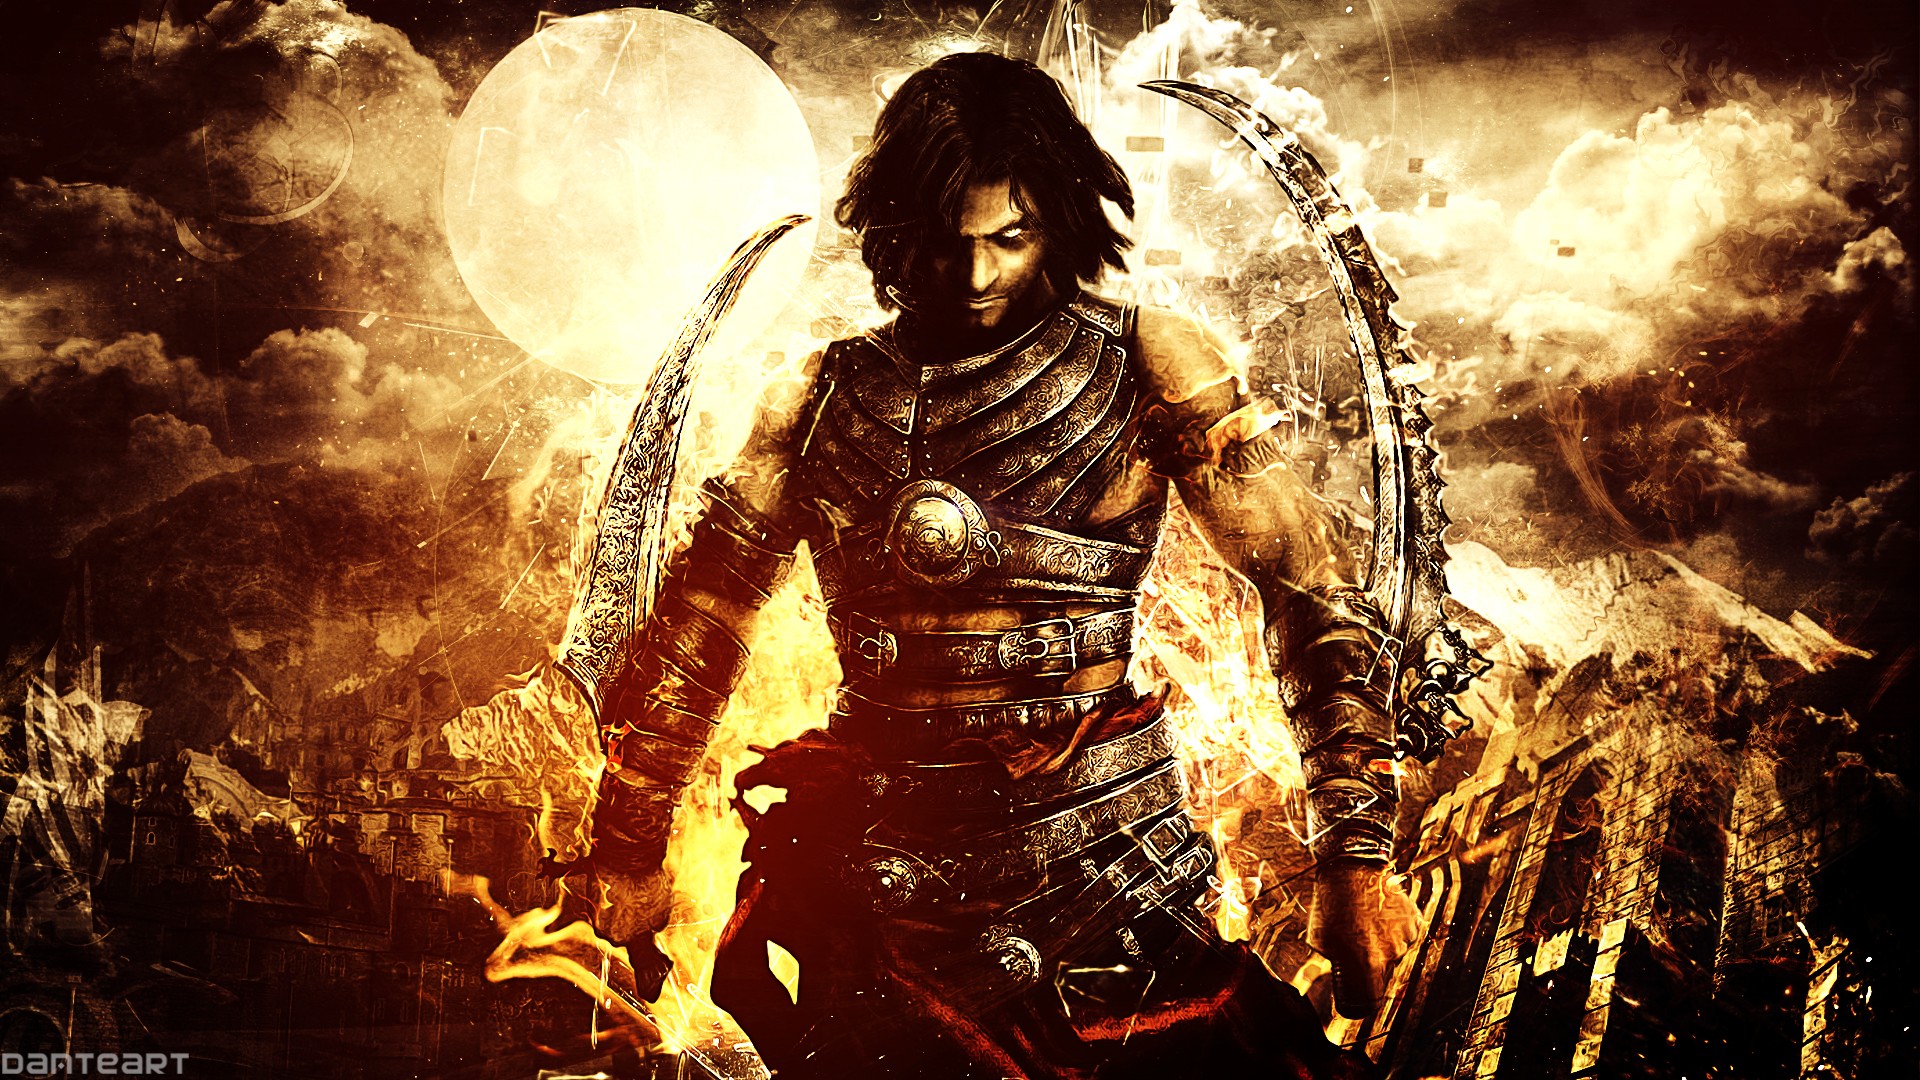 General 1920x1080 Prince of Persia: Warrior Within video games fantasy men fantasy art video game art